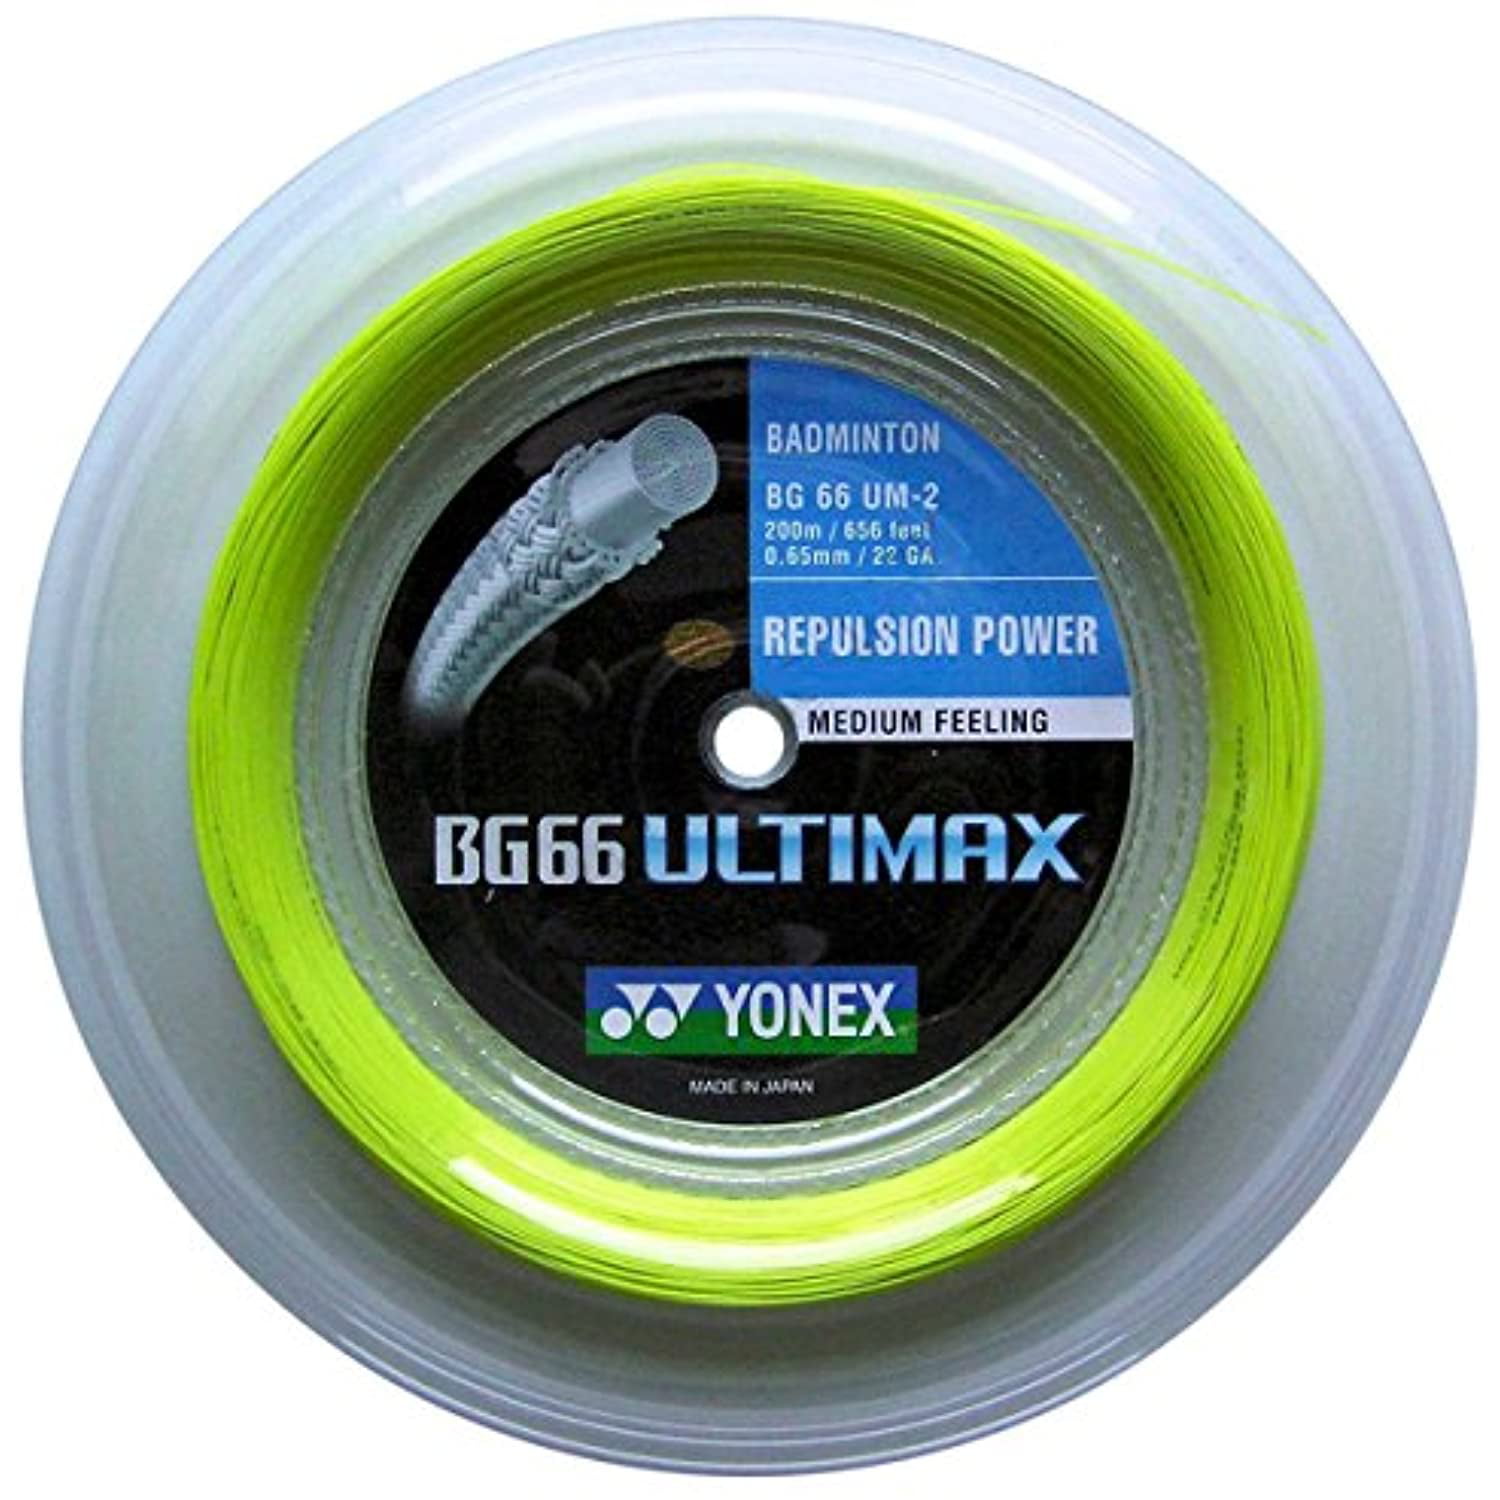 Genuine Yonex BG66 Ultimax Badminton String 10m Metallic White Free P&P 